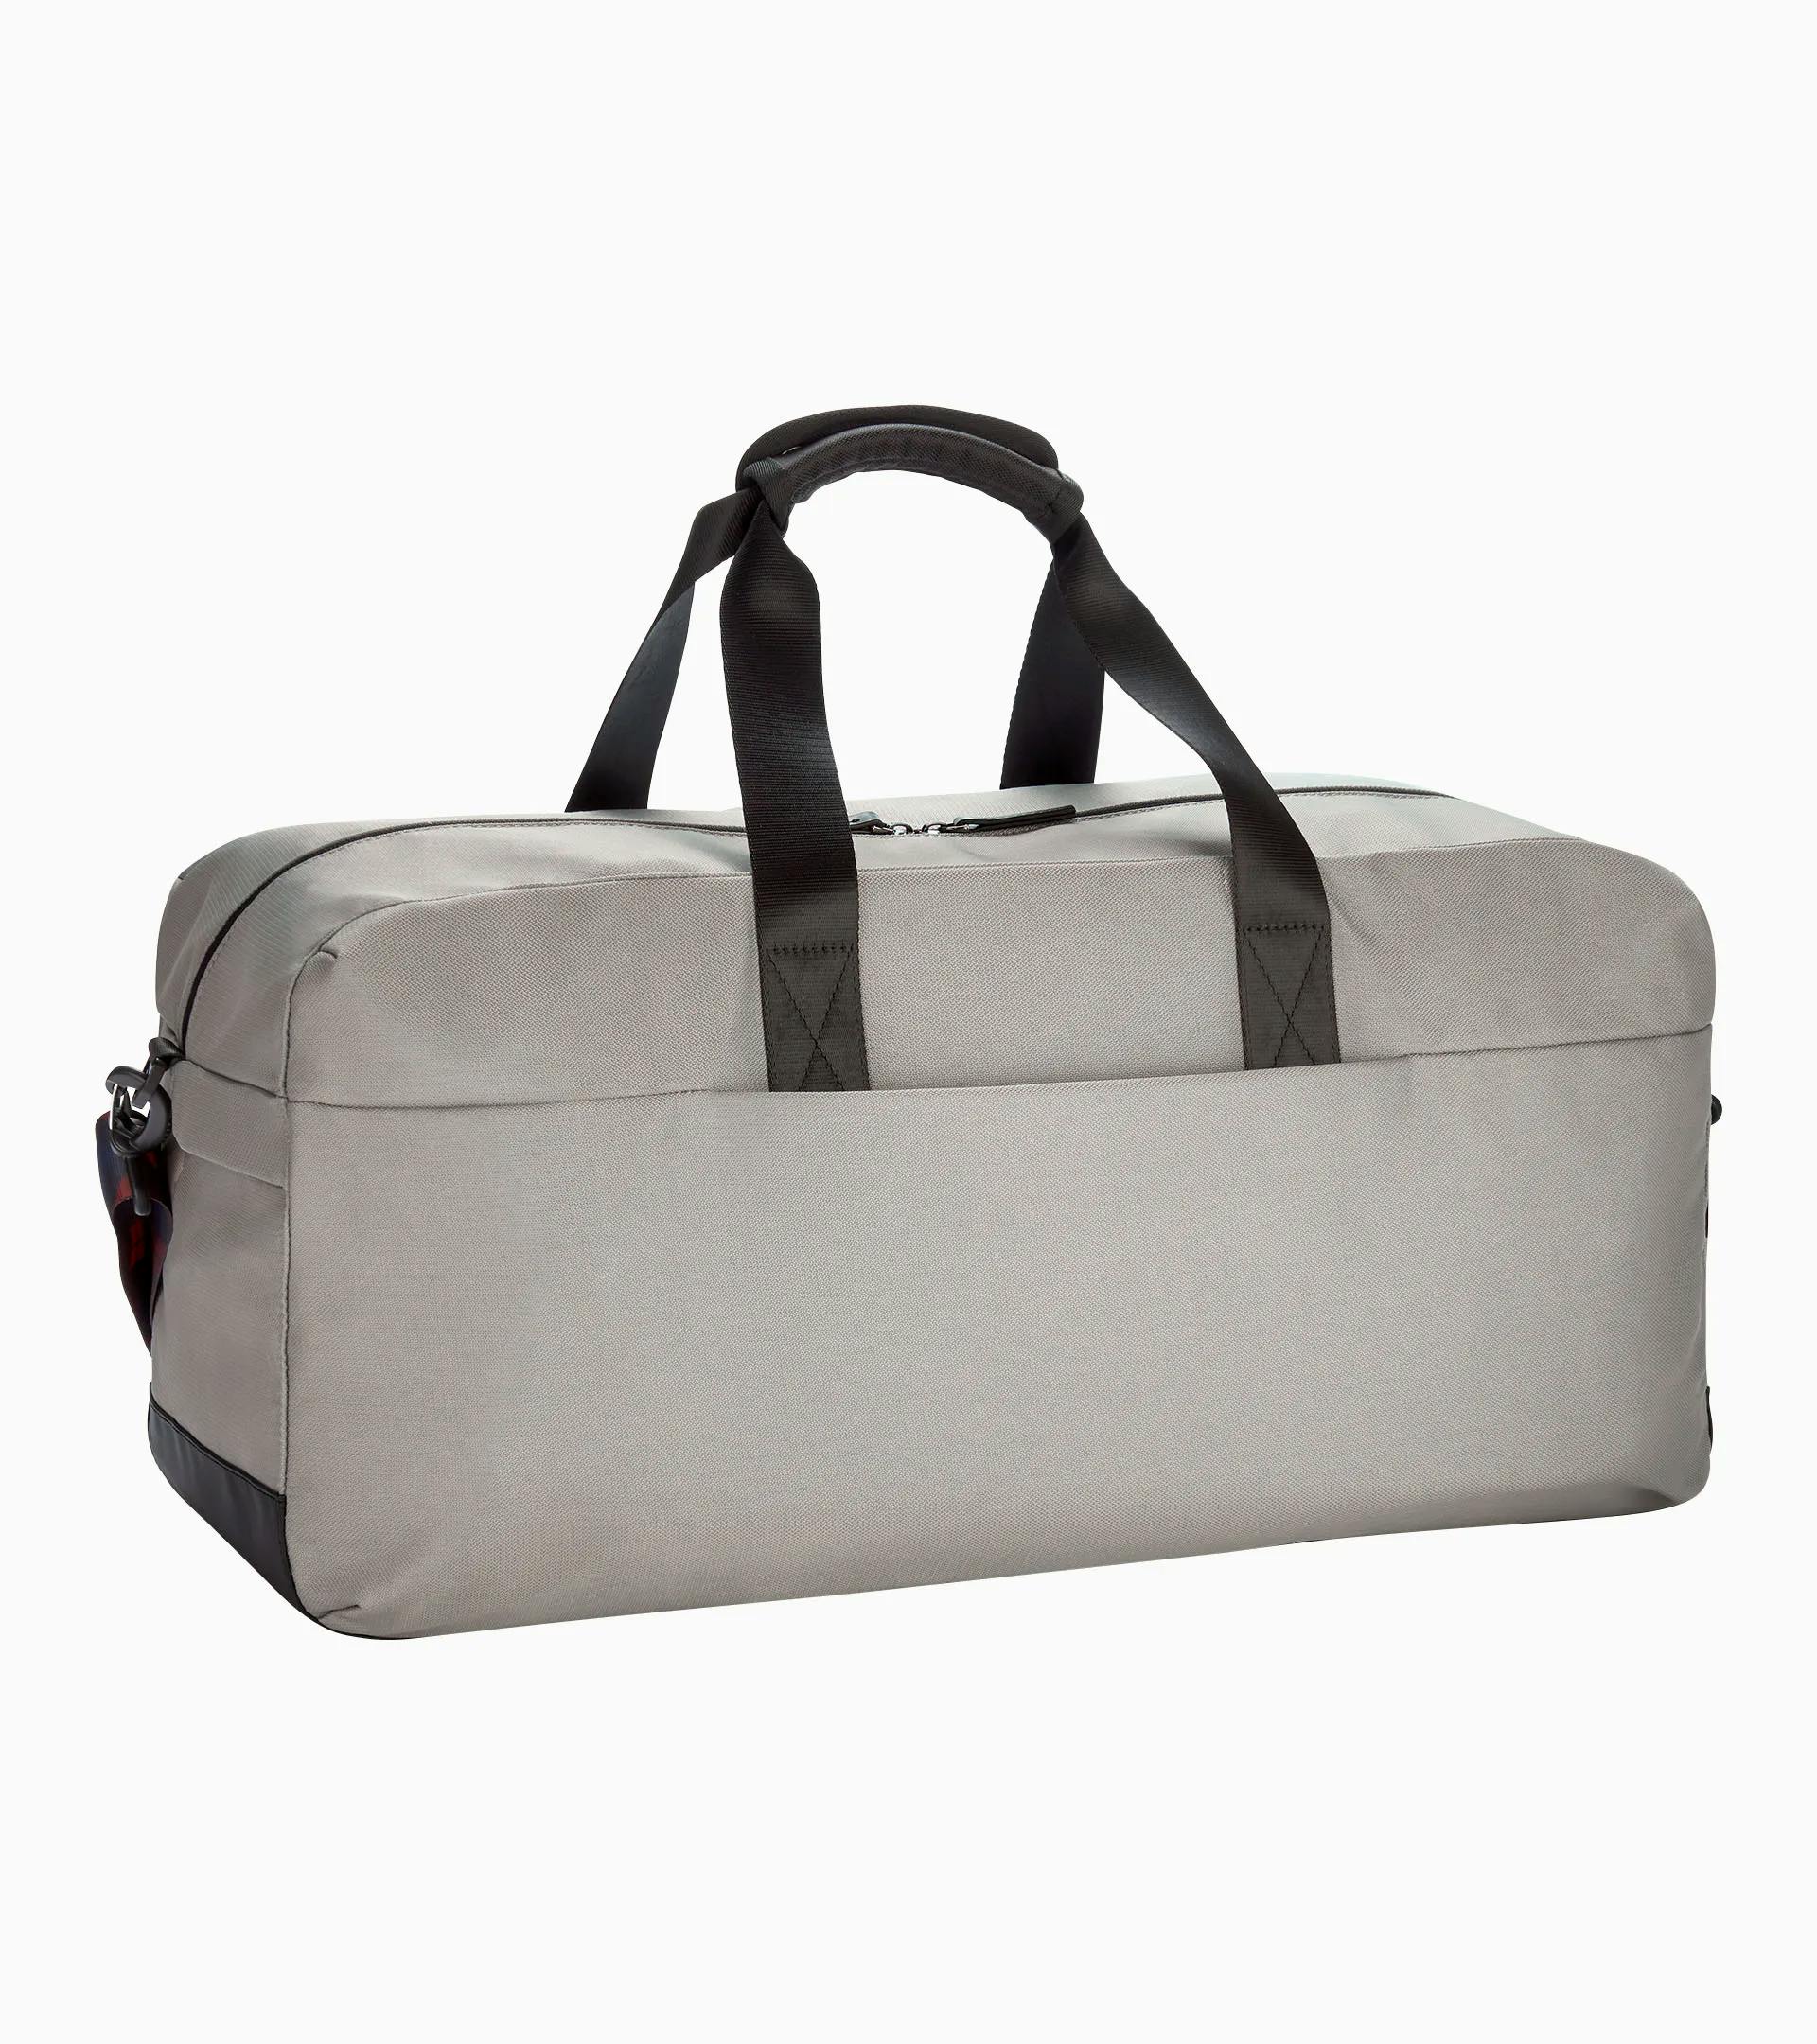 Travel bag – Turbo No. 1 7